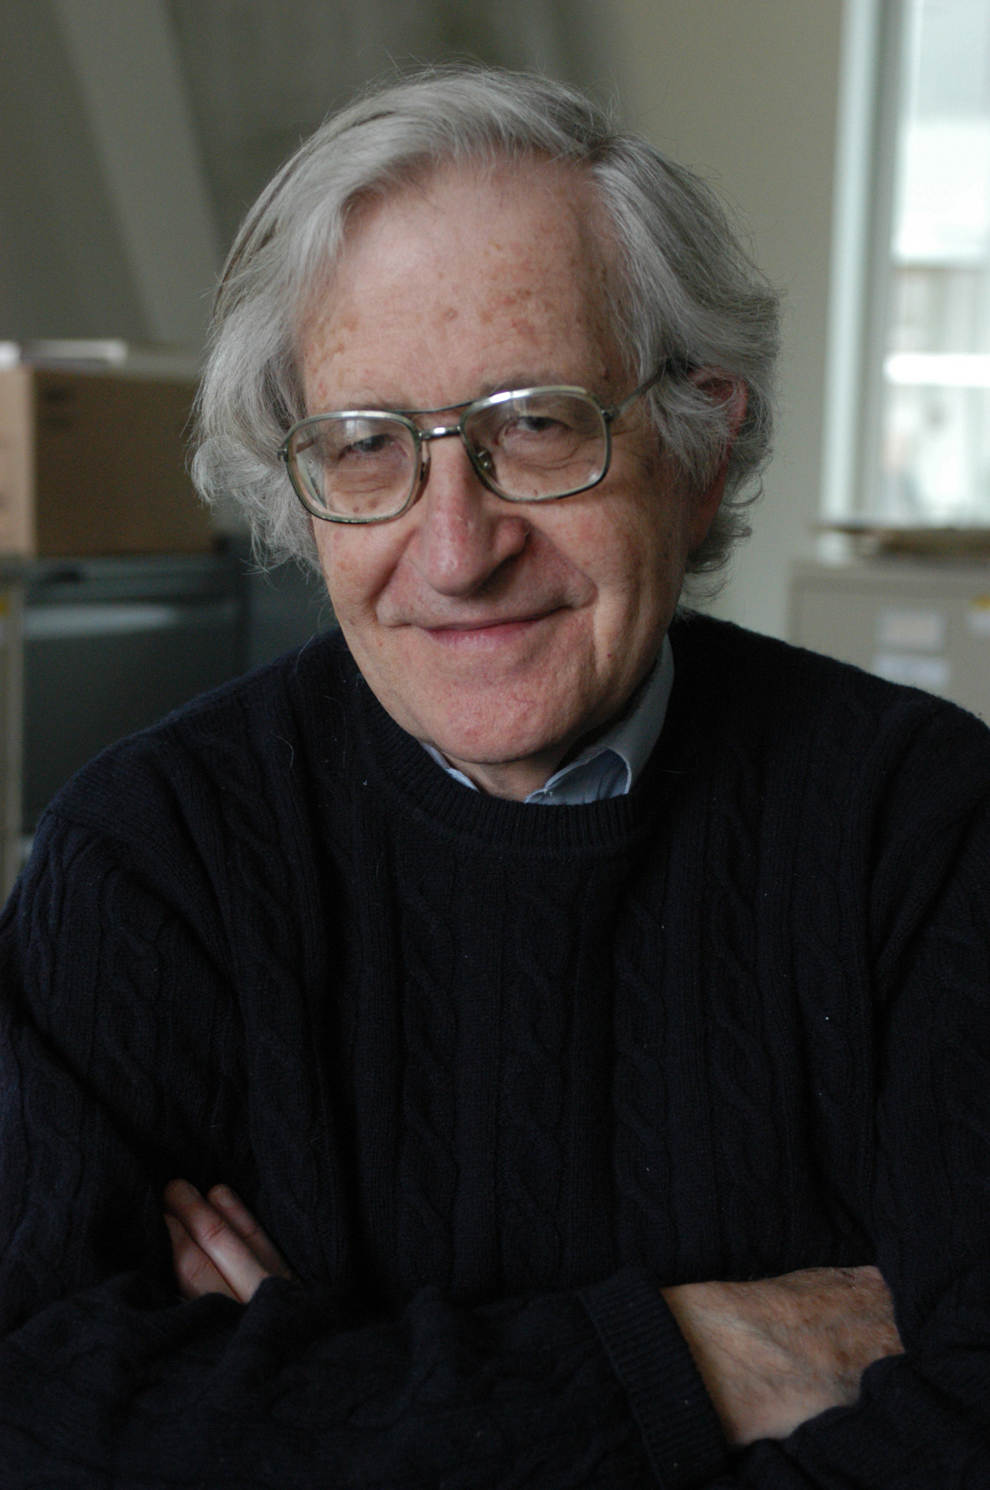 Noah Chomsky